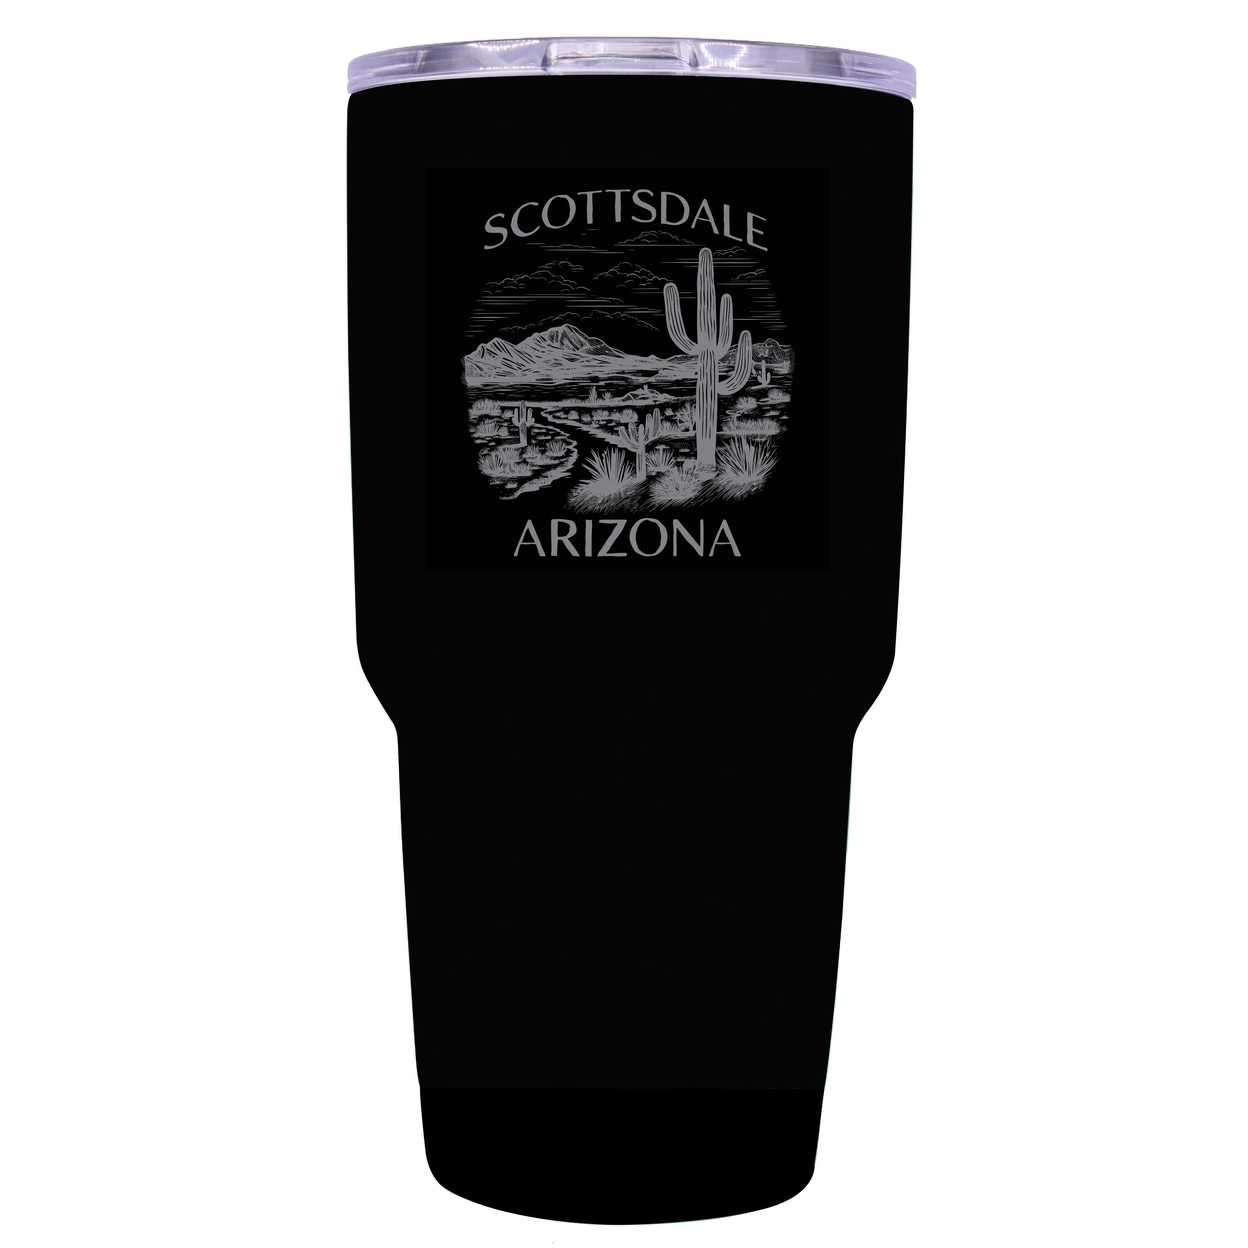 Scottsdale Arizona Souvenir 24 Oz Engraved Insulated Stainless Steel Tumbler - Black,,2-Pack